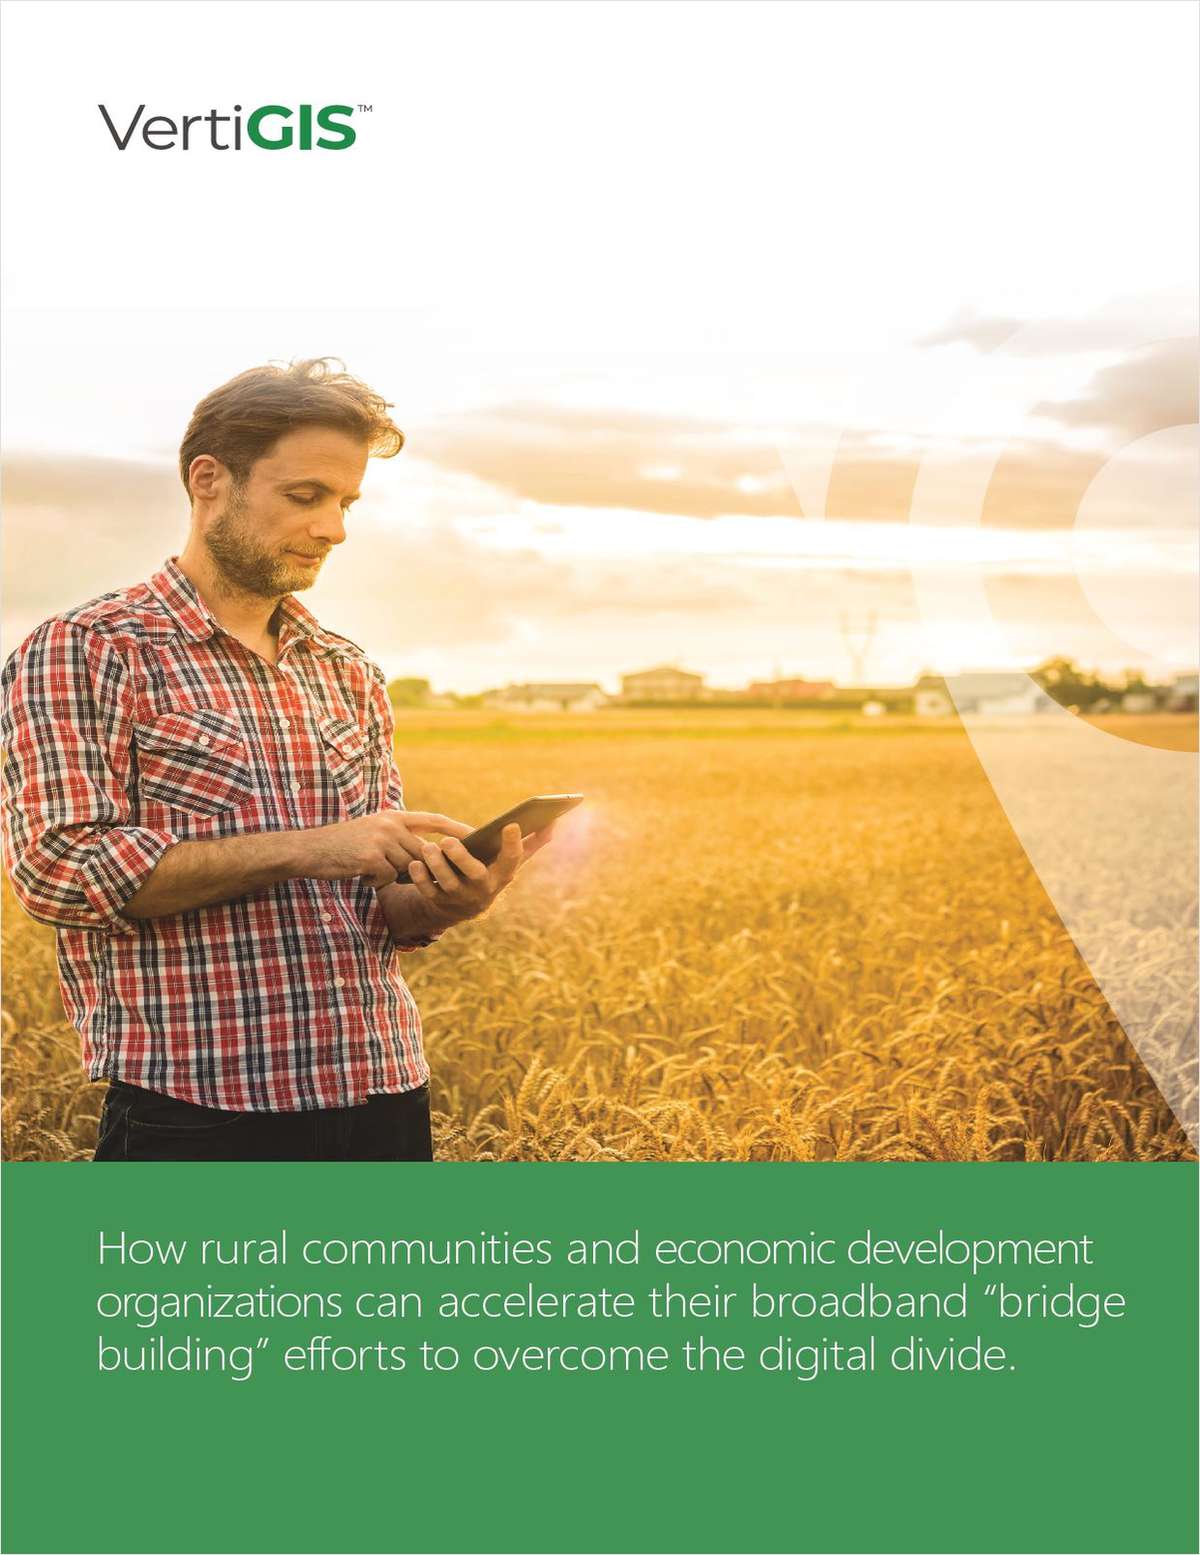 How Rural Communities & Economic Developers Can Accelerate Broadband Bridge Building to Overcome the Digital Divide